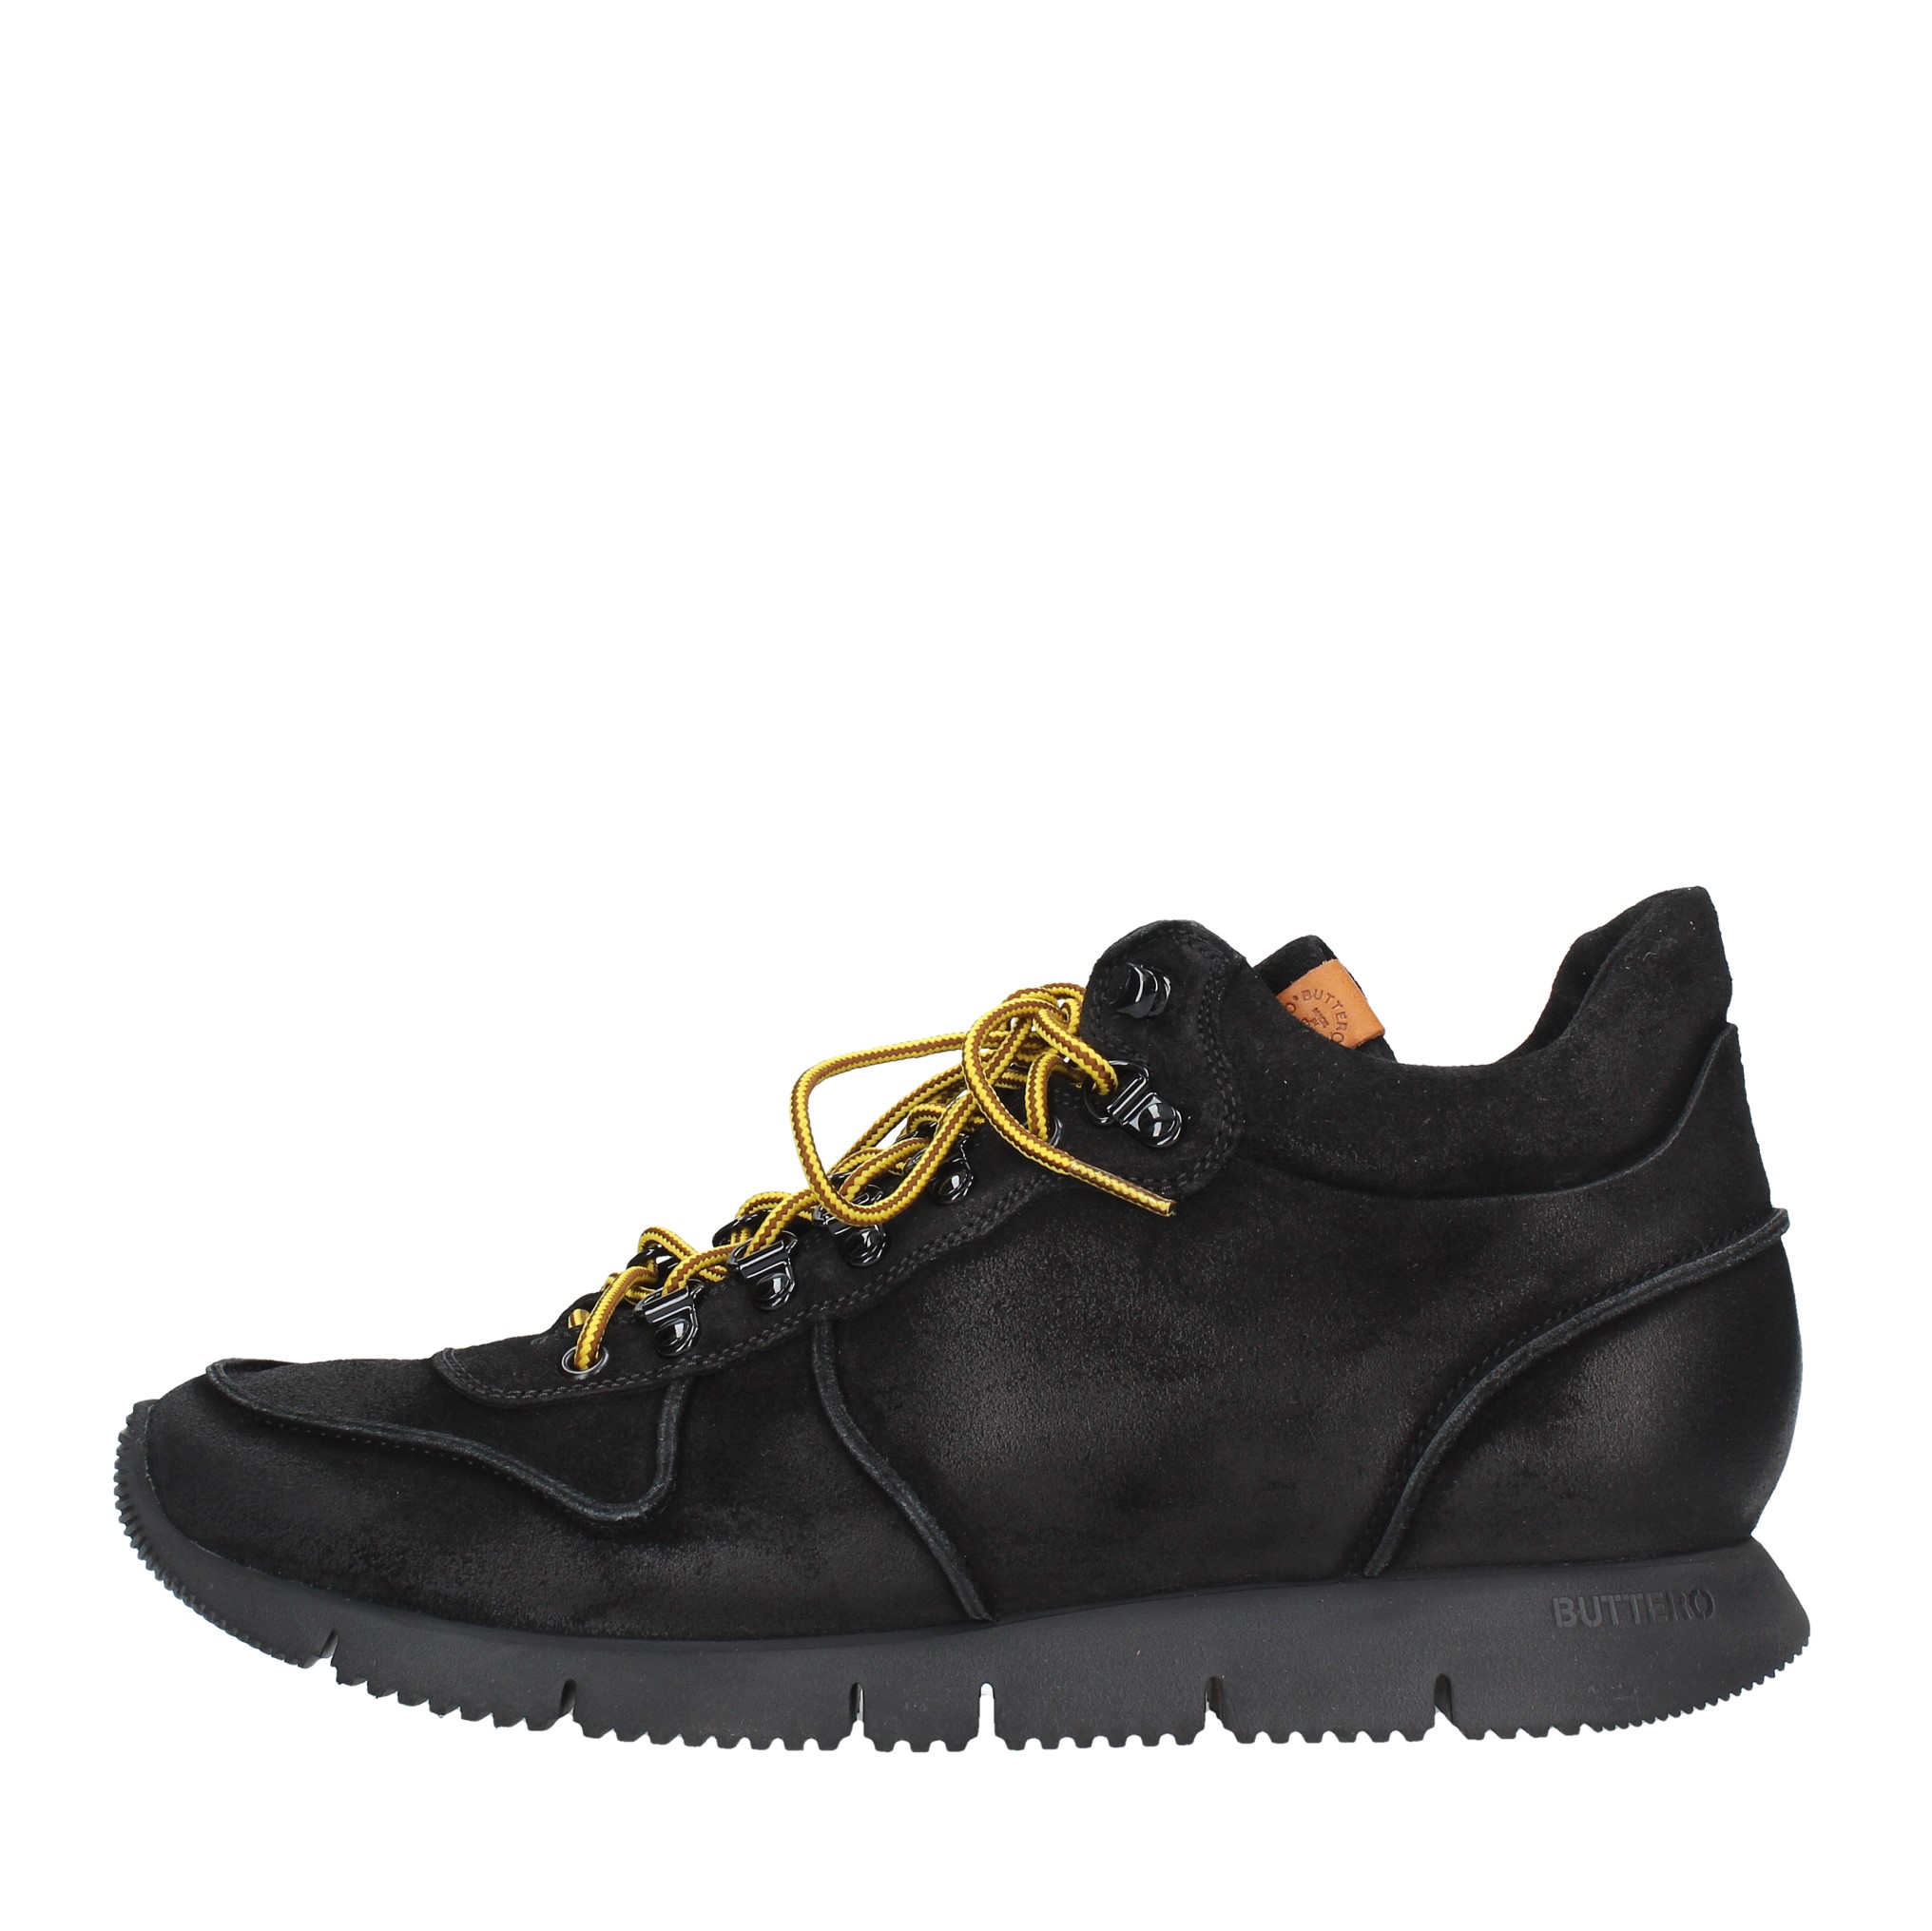 sneakers buttero - BUTTERO - Ginevra calzature